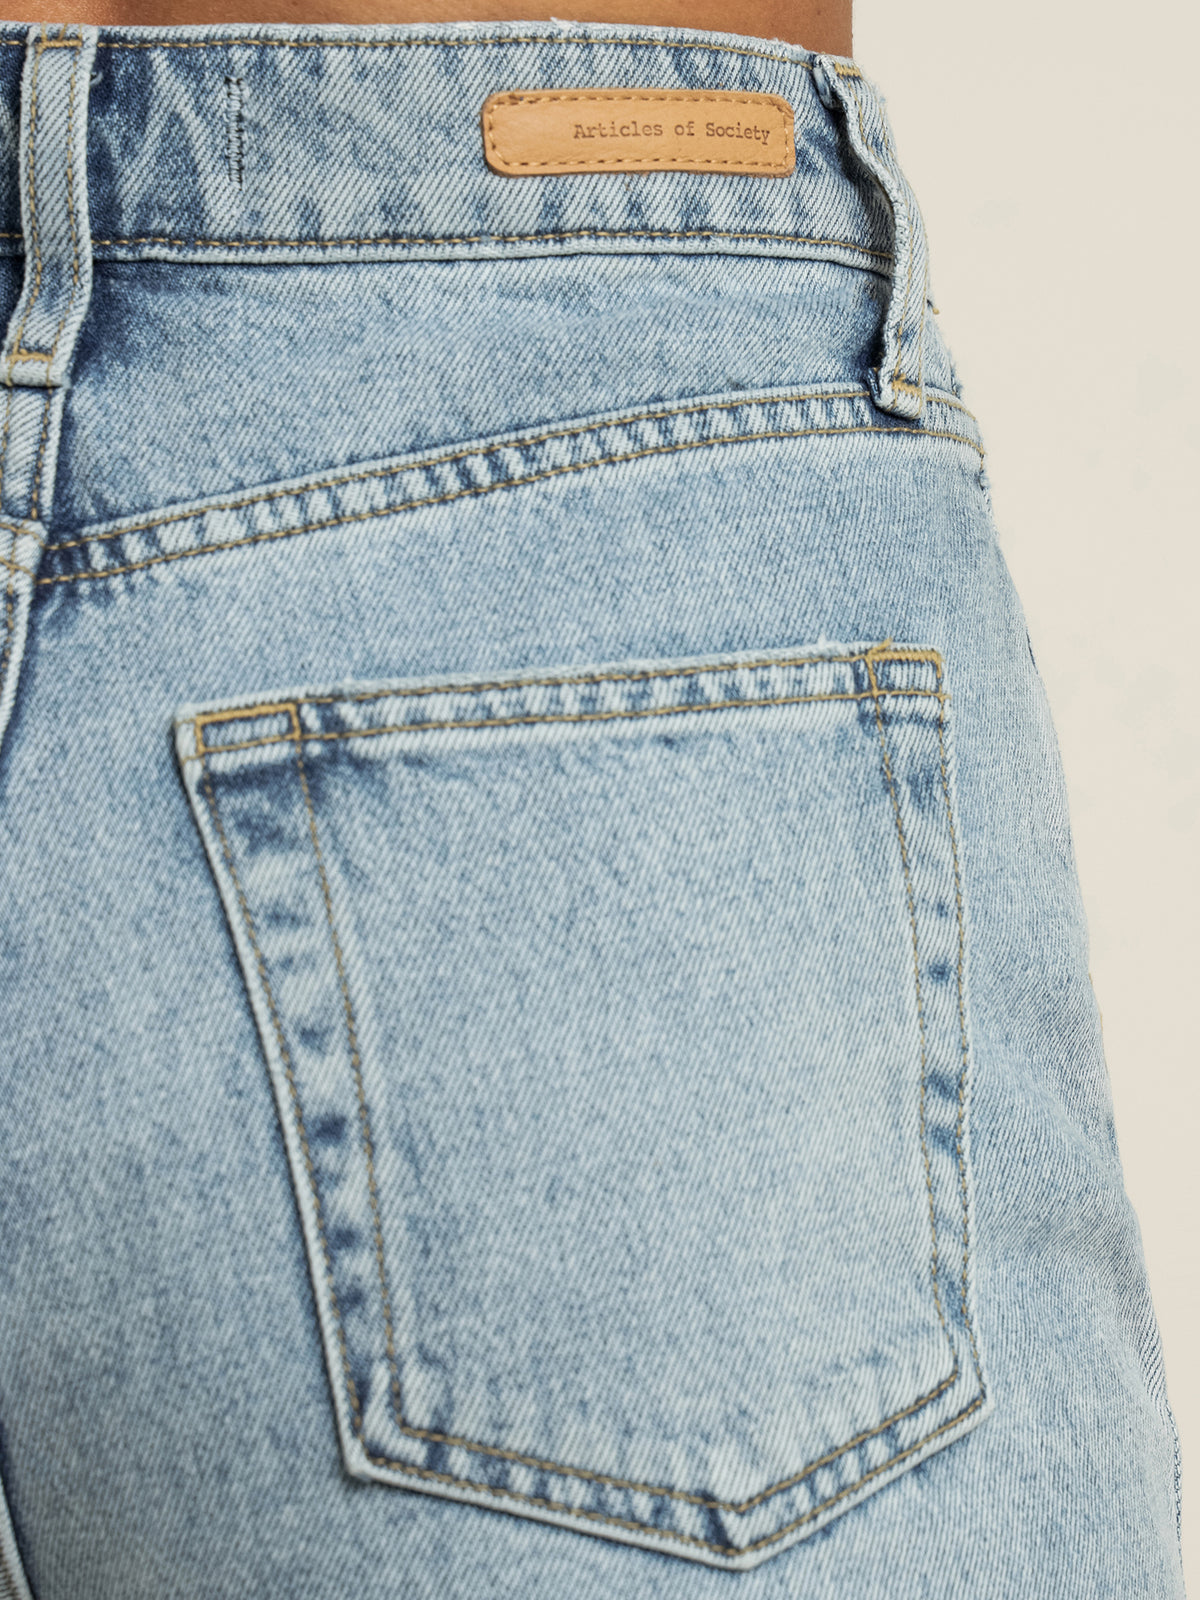 High Nina Cropped Jeans in Vintage Blue